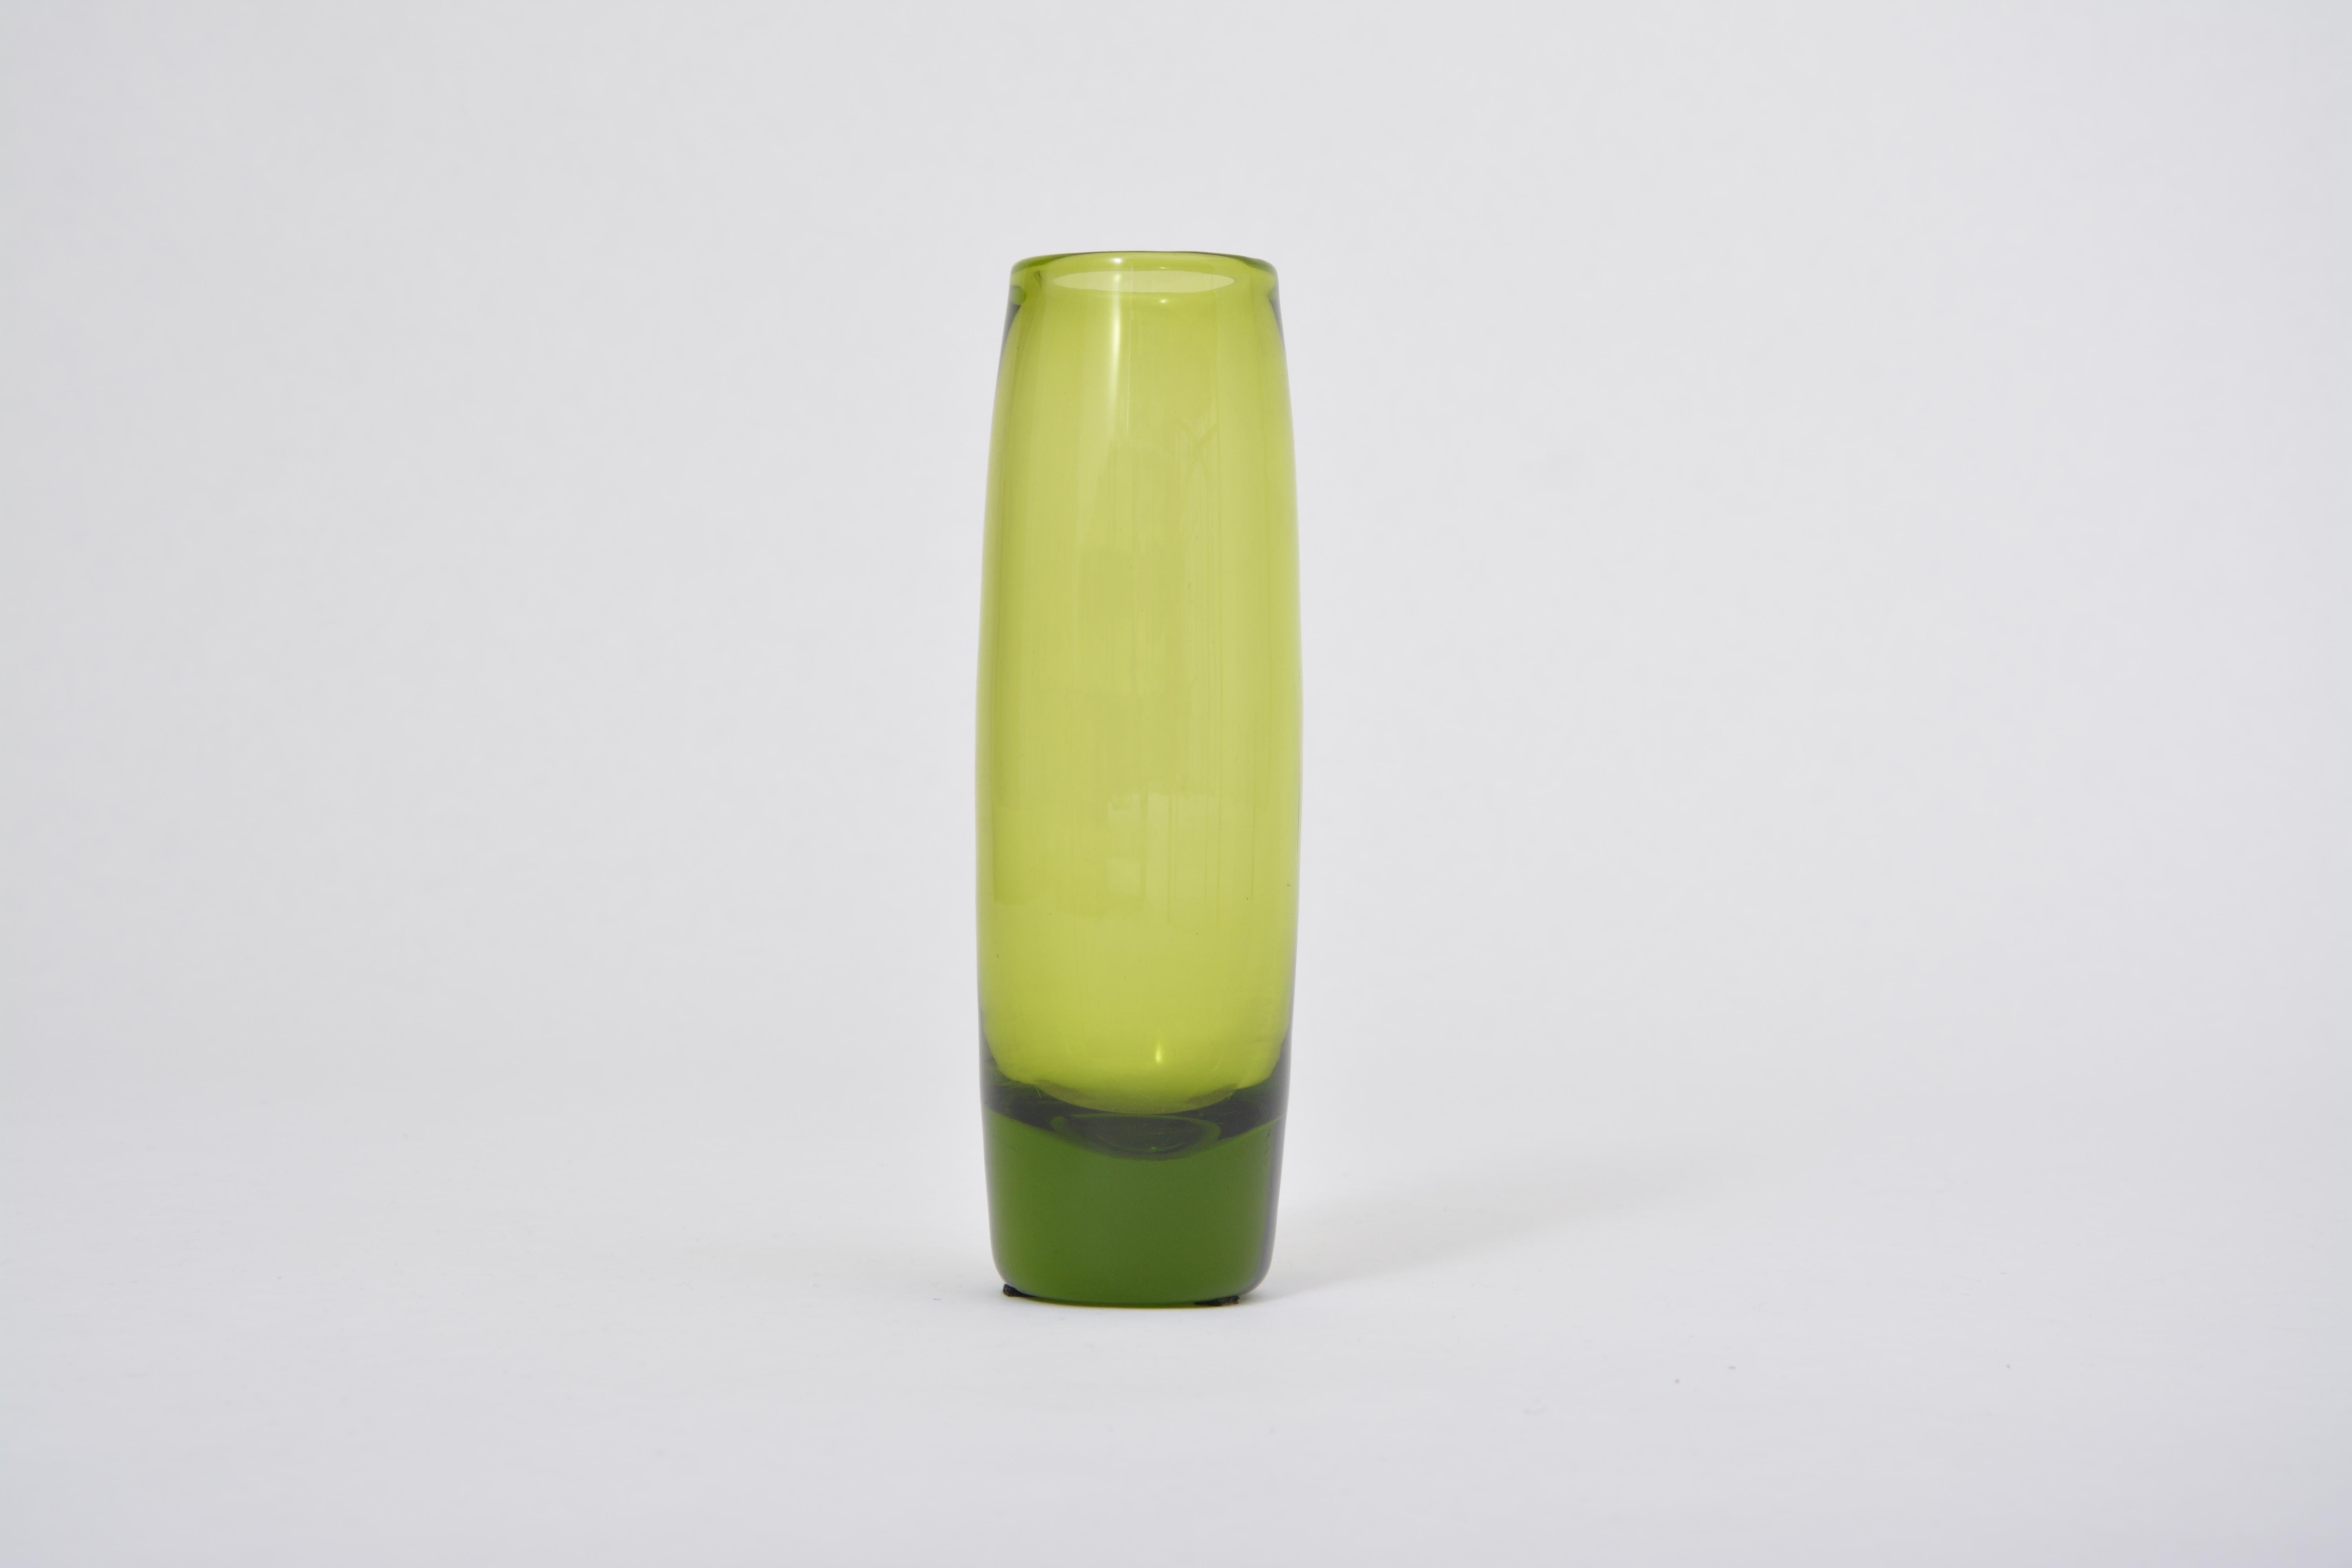 Vintage Maygreen Vase by Per Lütken for Holmegaard
Green glass vase from the Maygreen series designed by Per Lütken and produced by Holmegaard.
 The series was produced between 1955 and 1974.